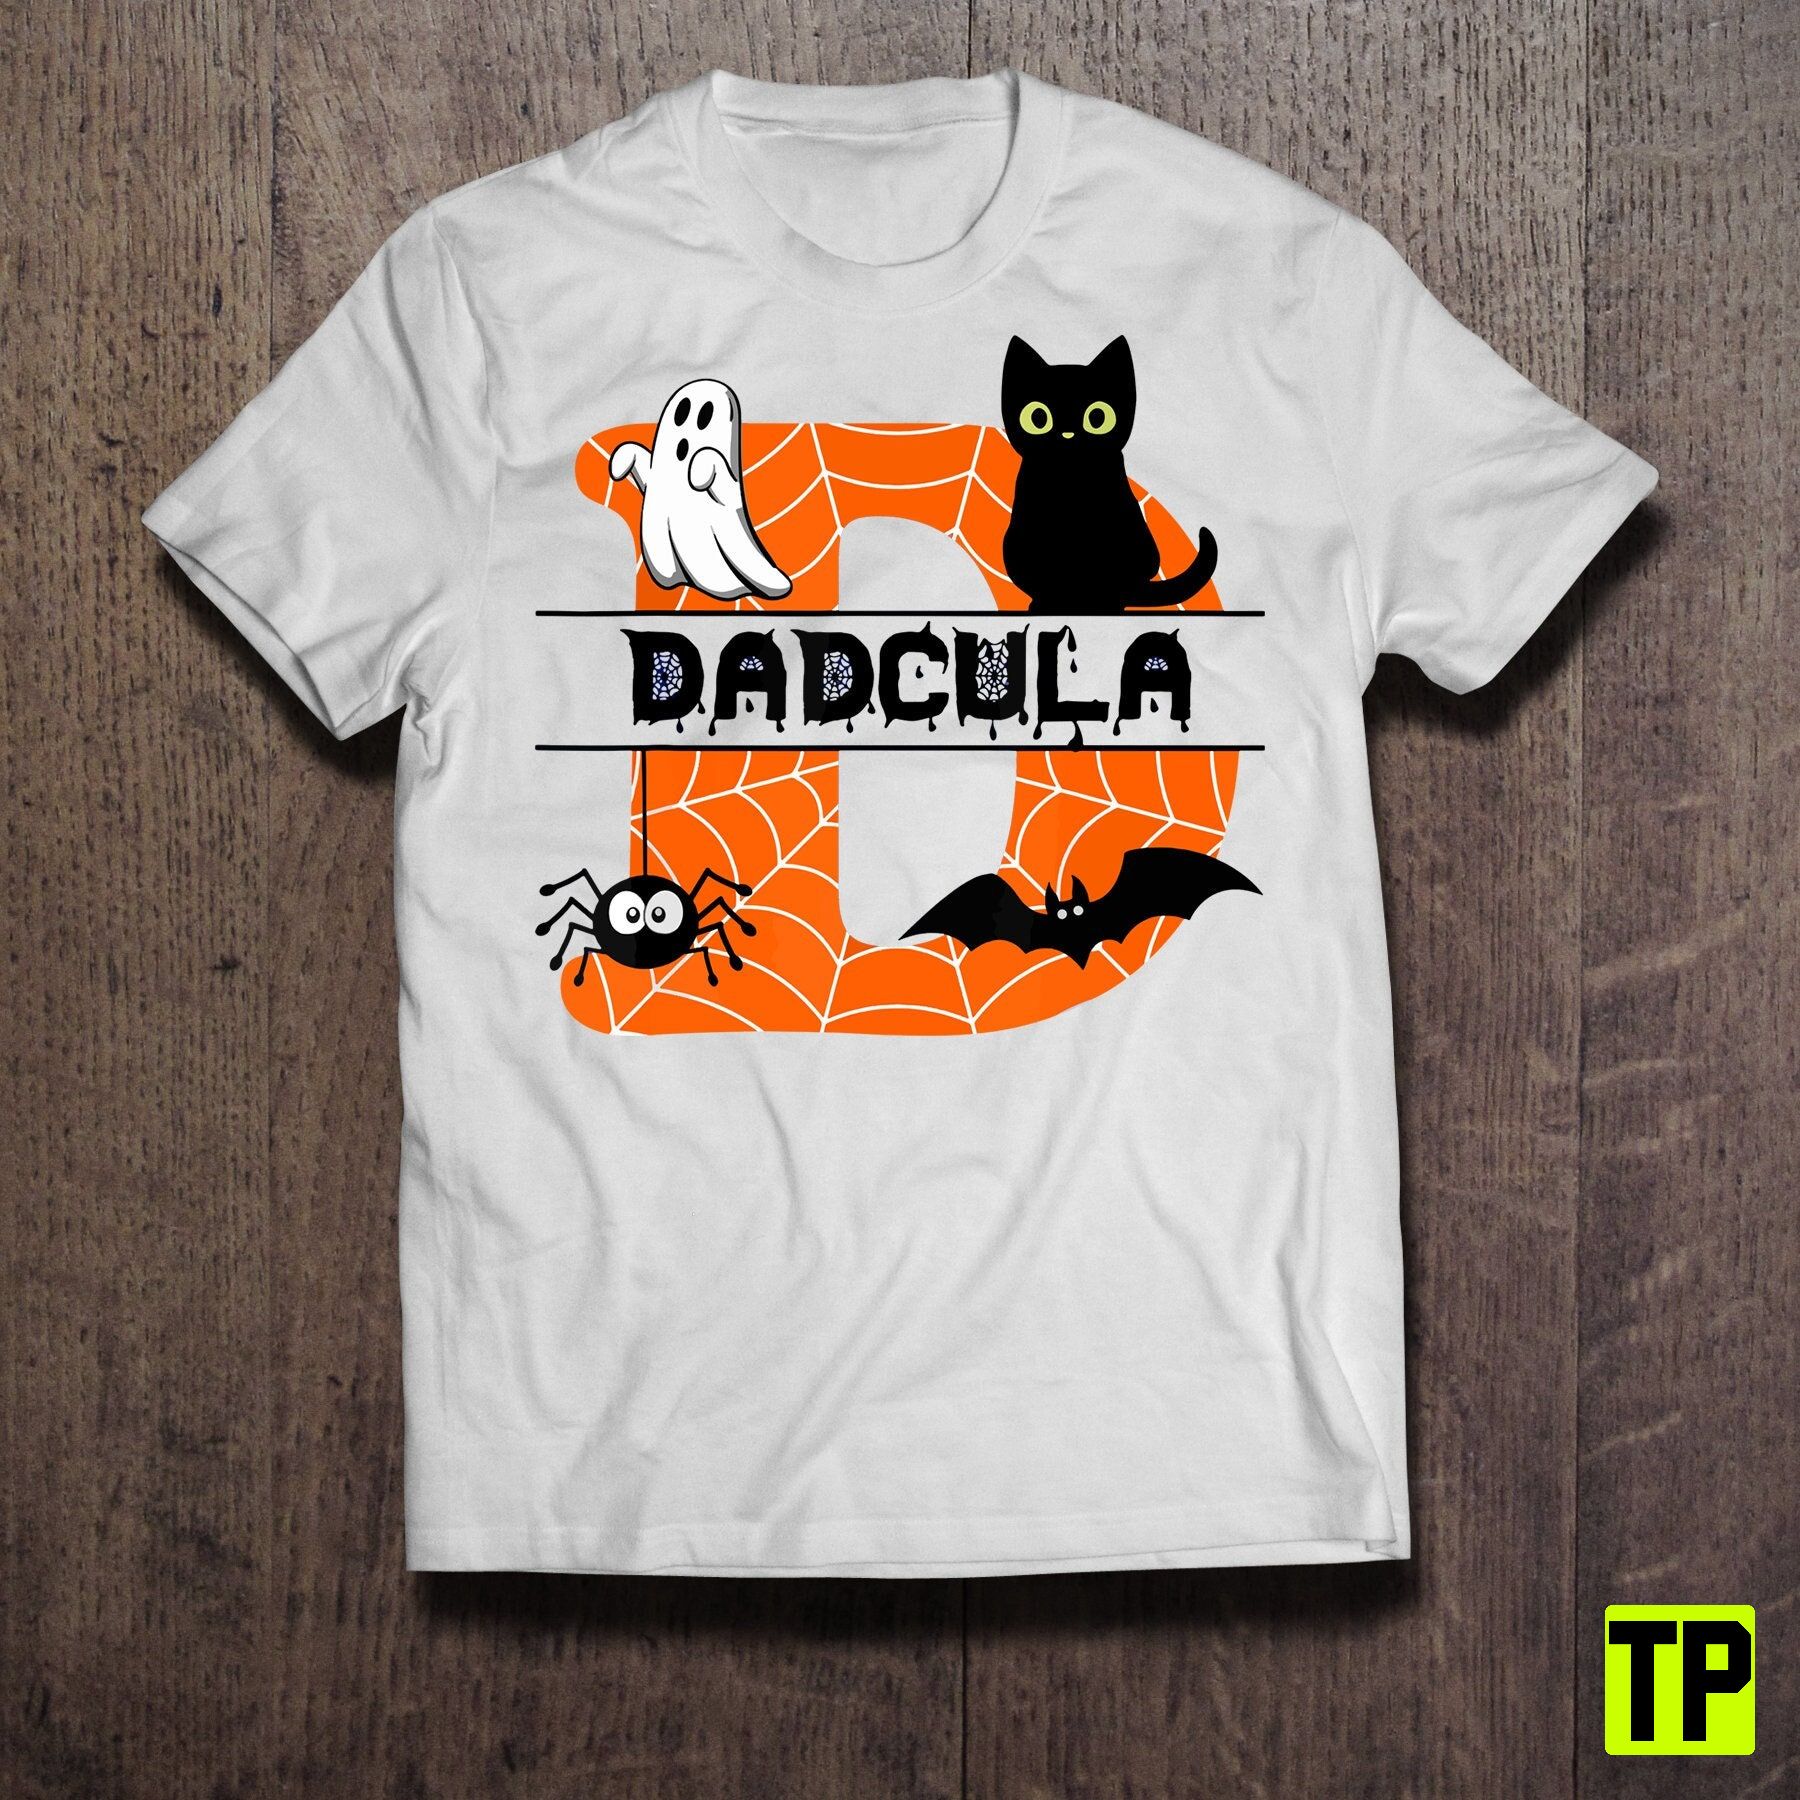 Dadcula Spider Web Funny Ghost Bat Black Cat Tshit Unisex Shirt